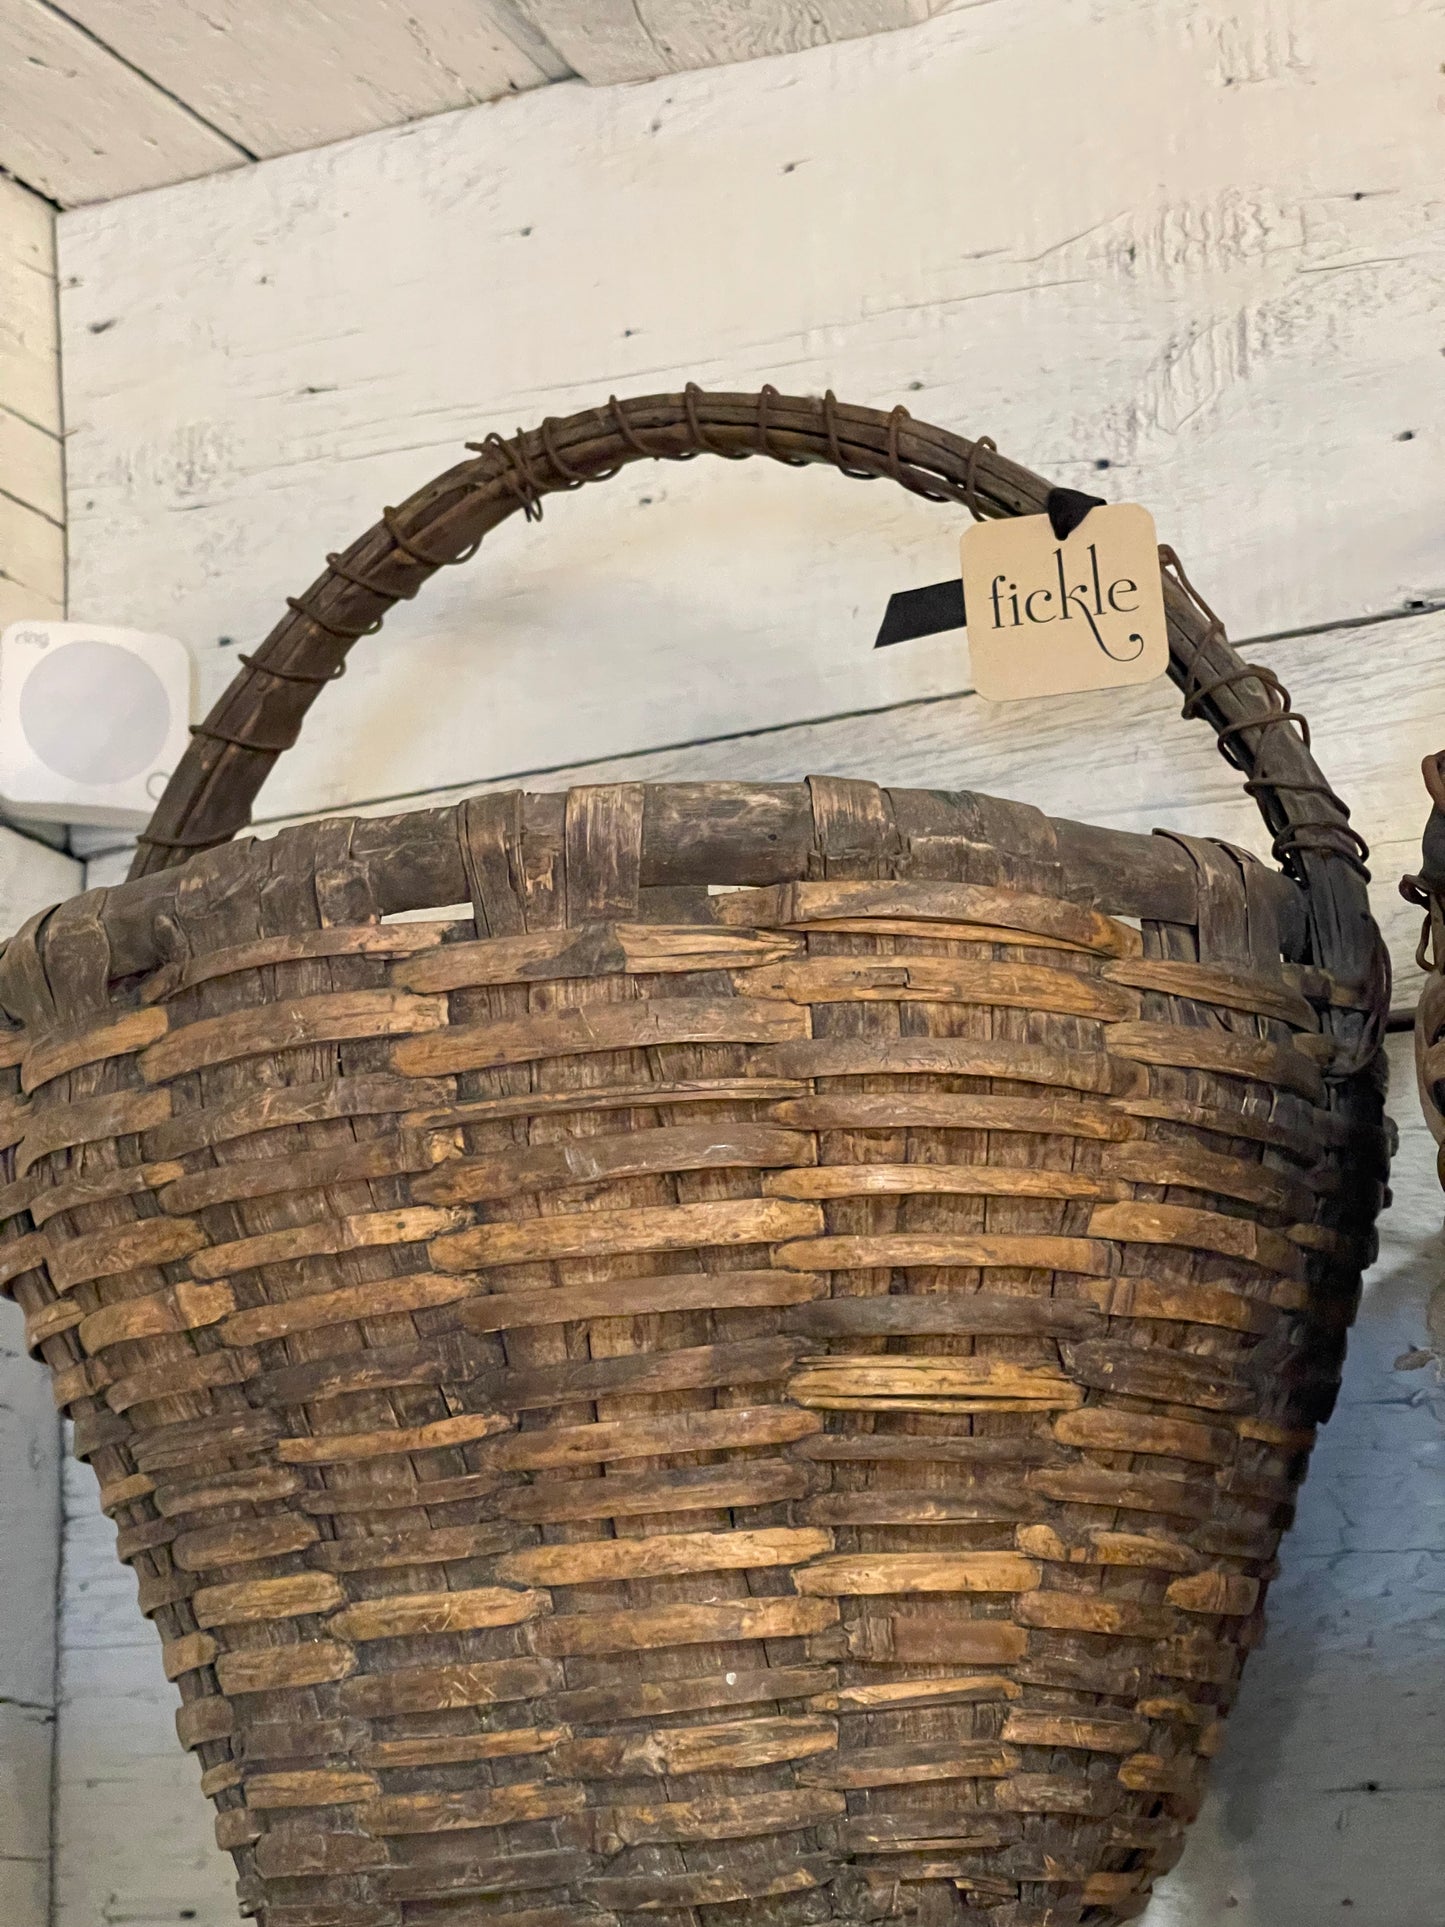 Fruit Basket - The White Barn Antiques